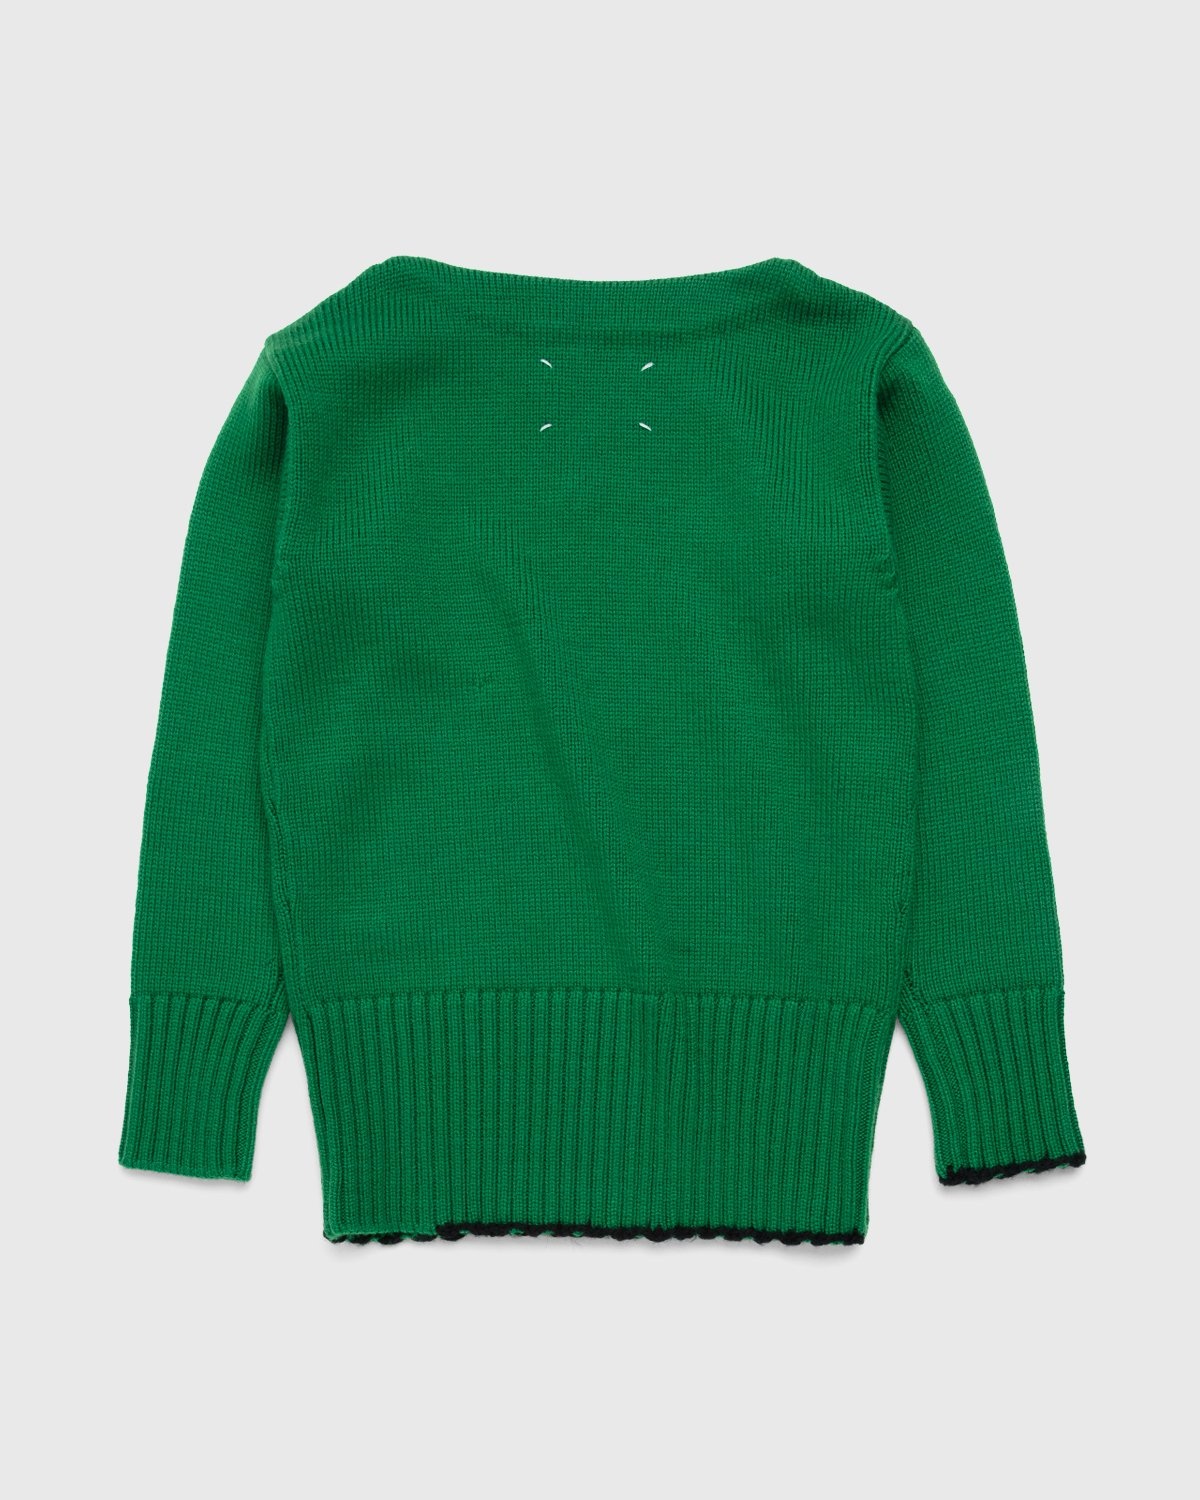 Maison Margiela – Summer Camp Sweater Green - Knitwear - Green - Image 2